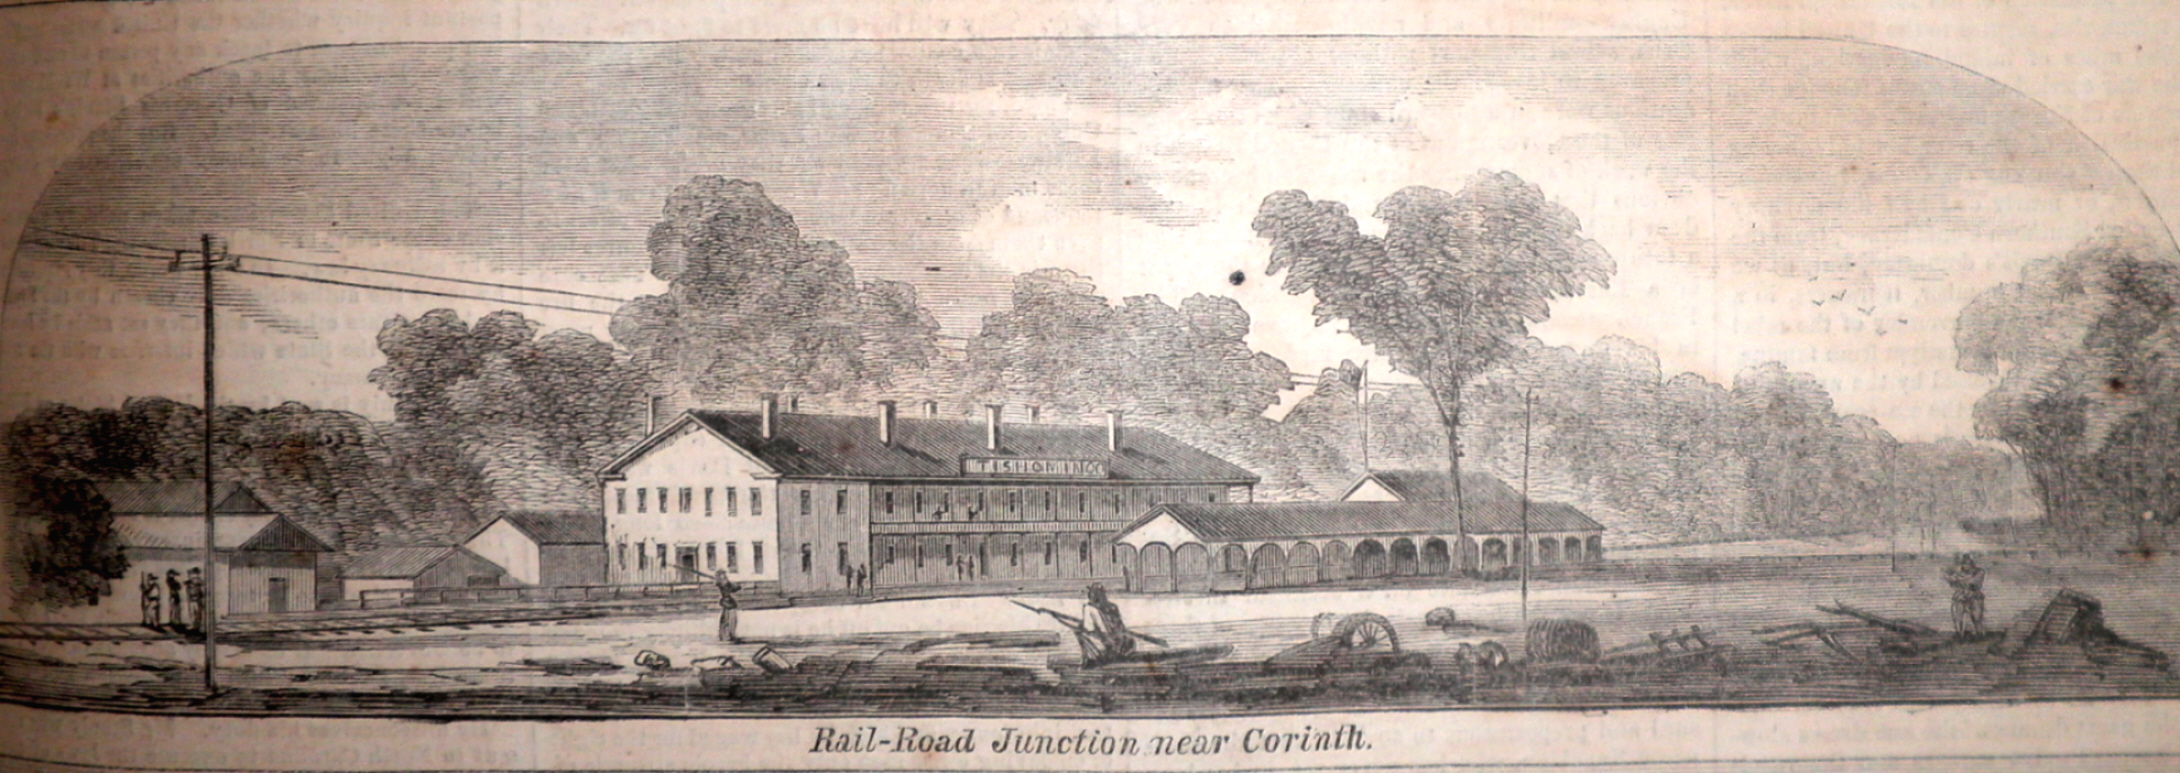 'Railroad Junction near Corinth' Harper's Weekly, June 21,1862